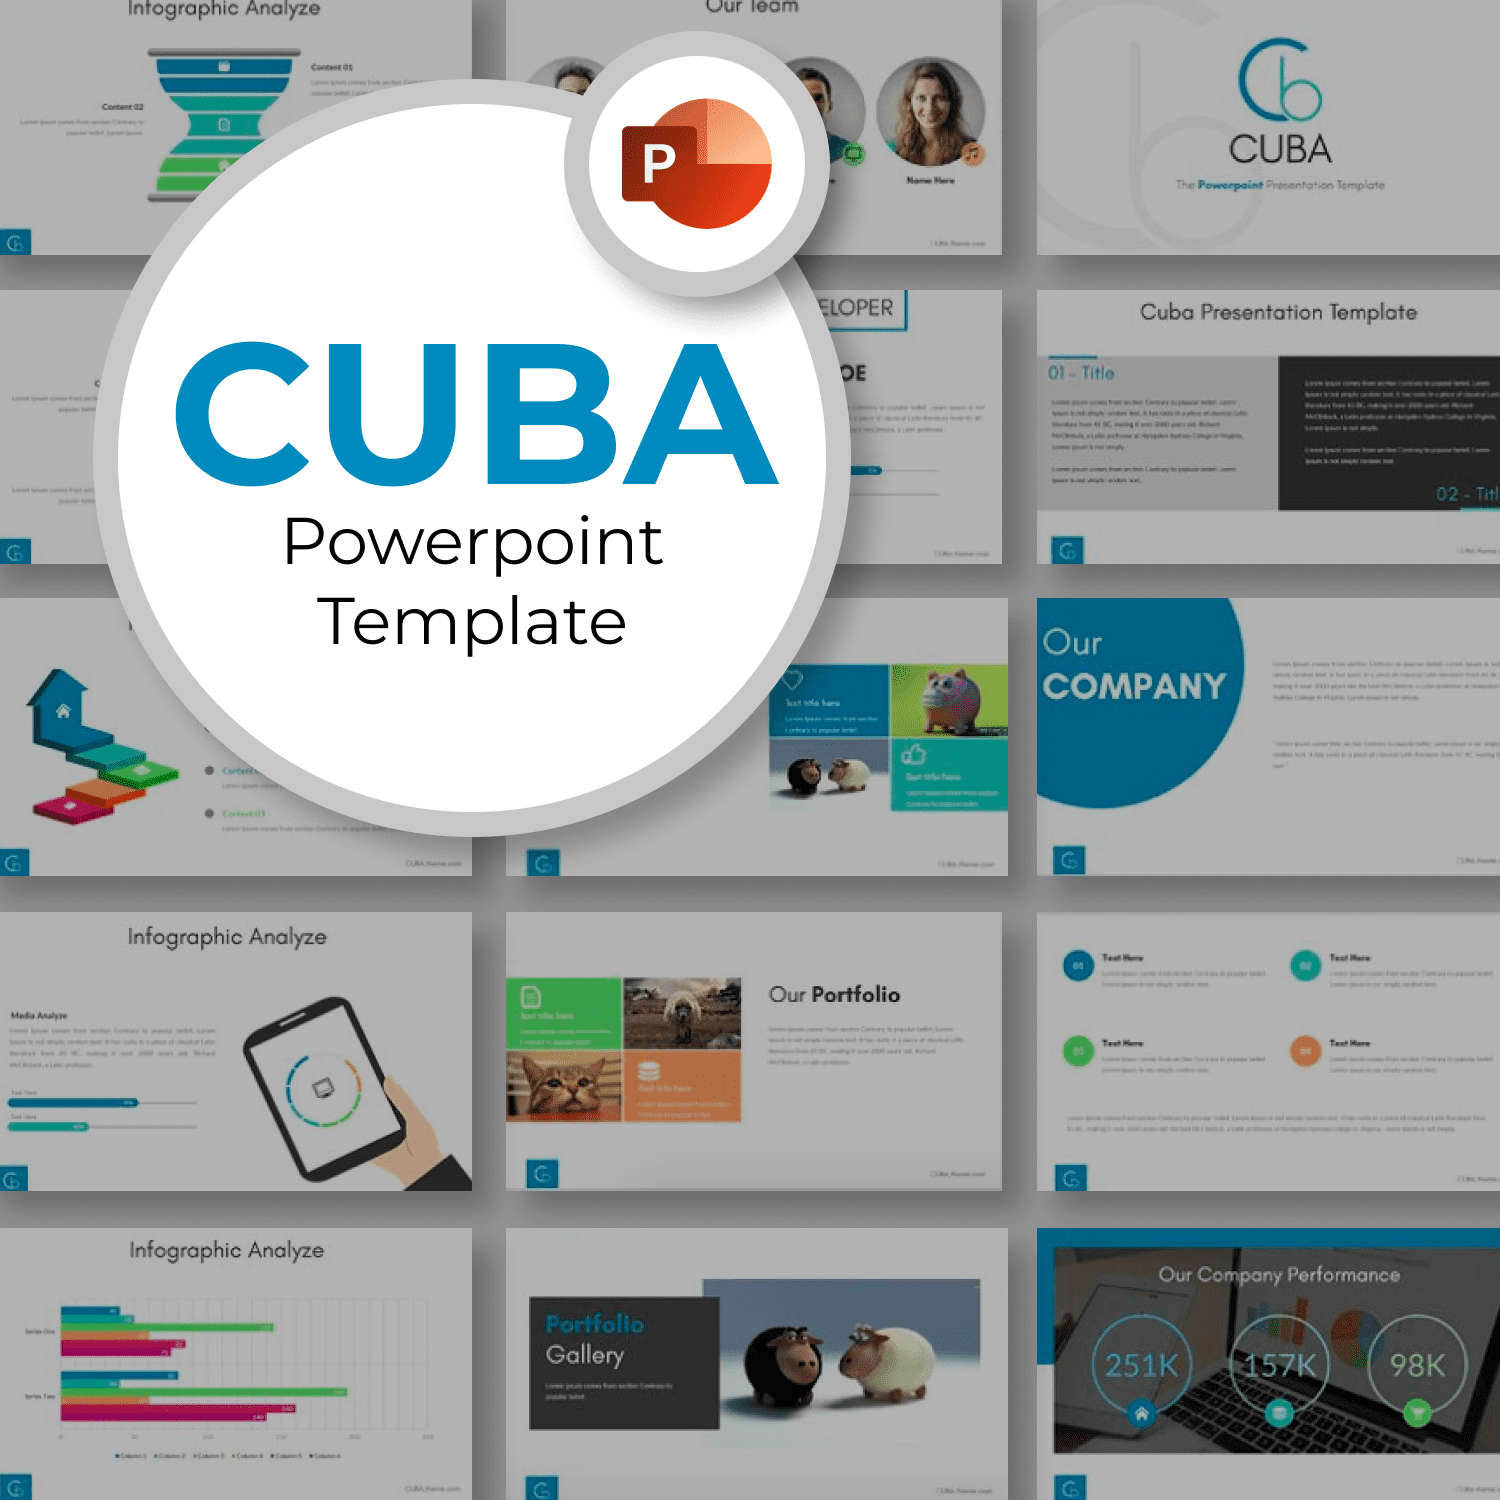 Cuba - Powerpoint Template by MasterBundles.